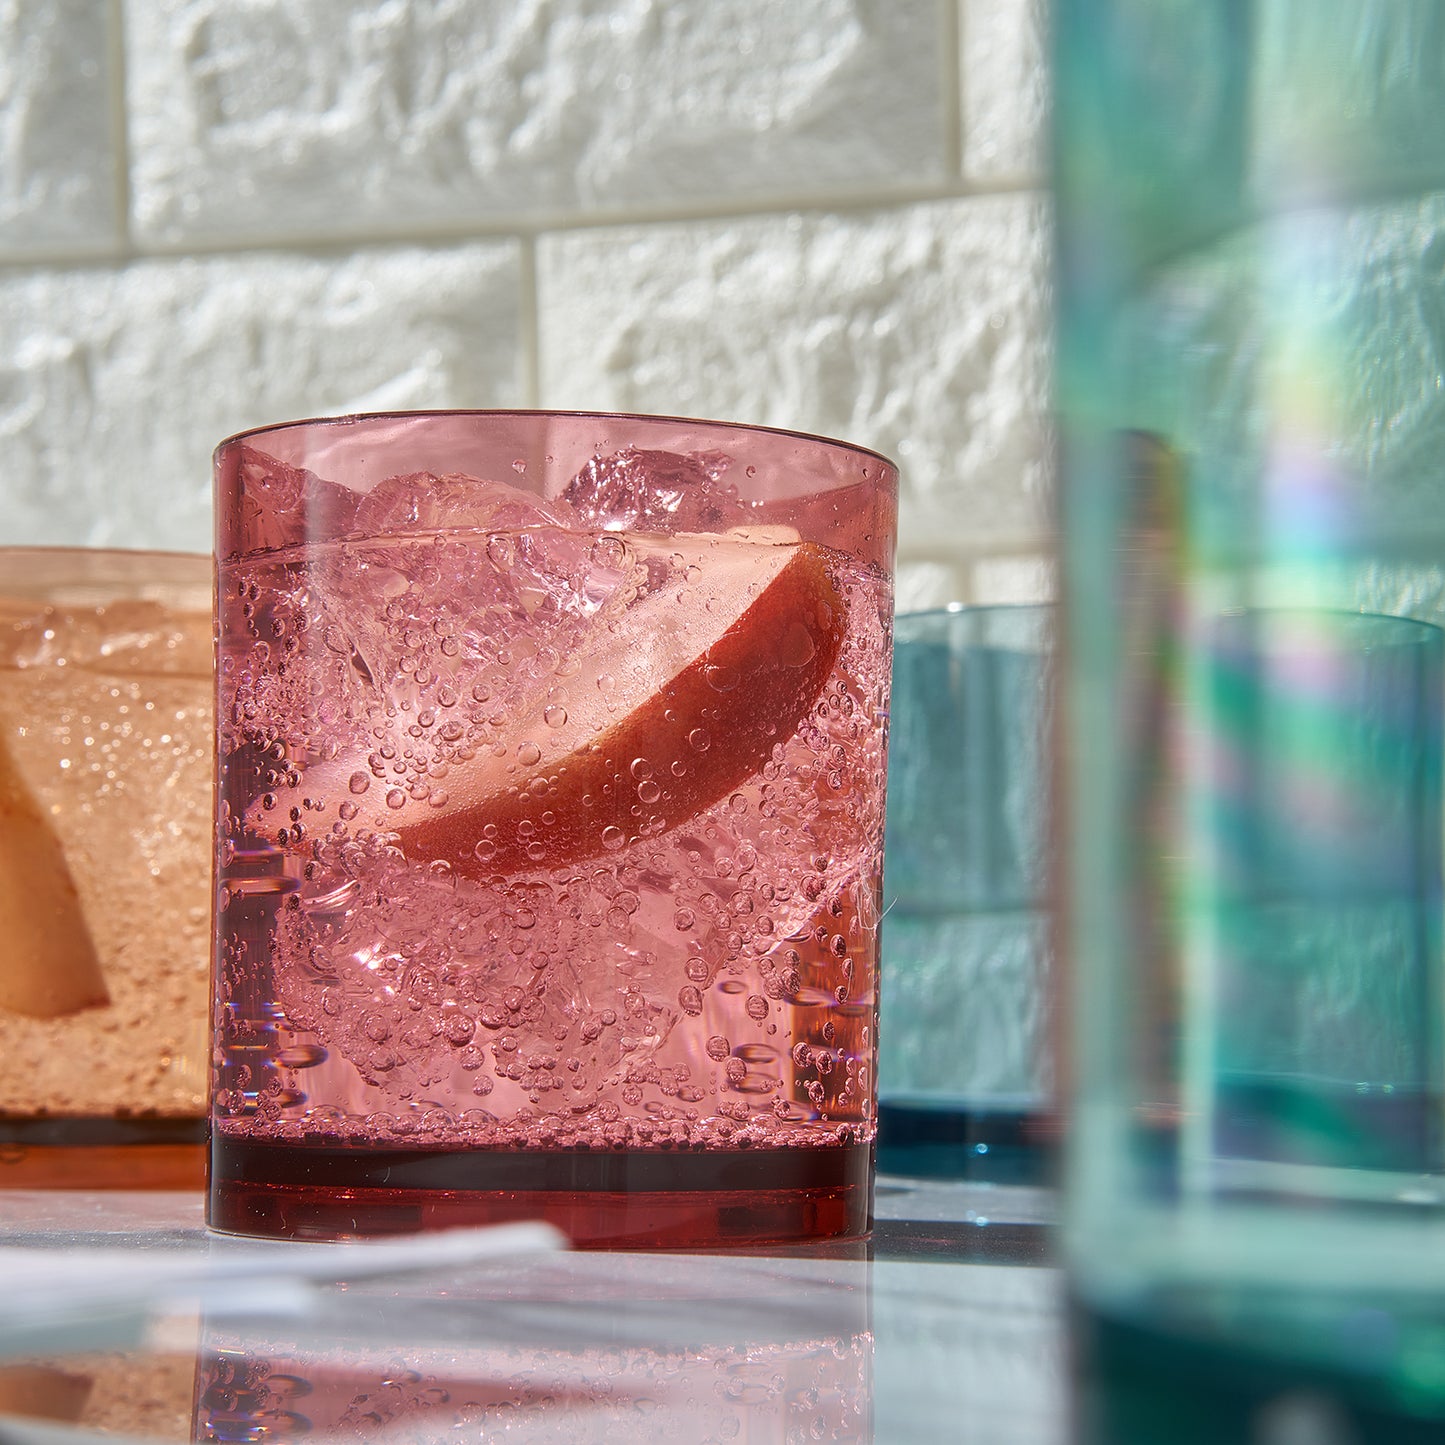 Eze Whiskey Glass, Unbreakable Acrylic, Set of 4